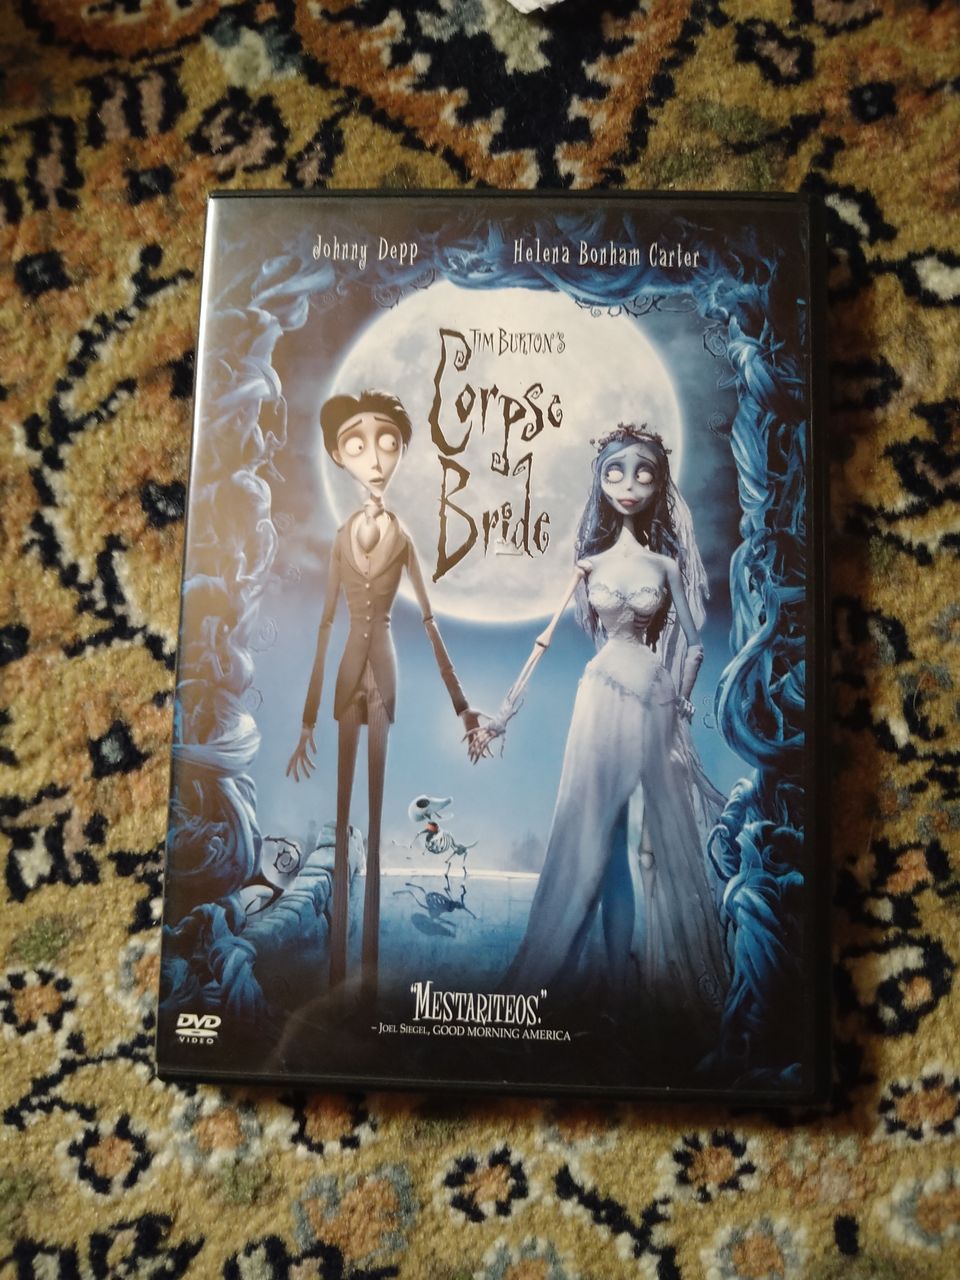 Corpse bride dvd